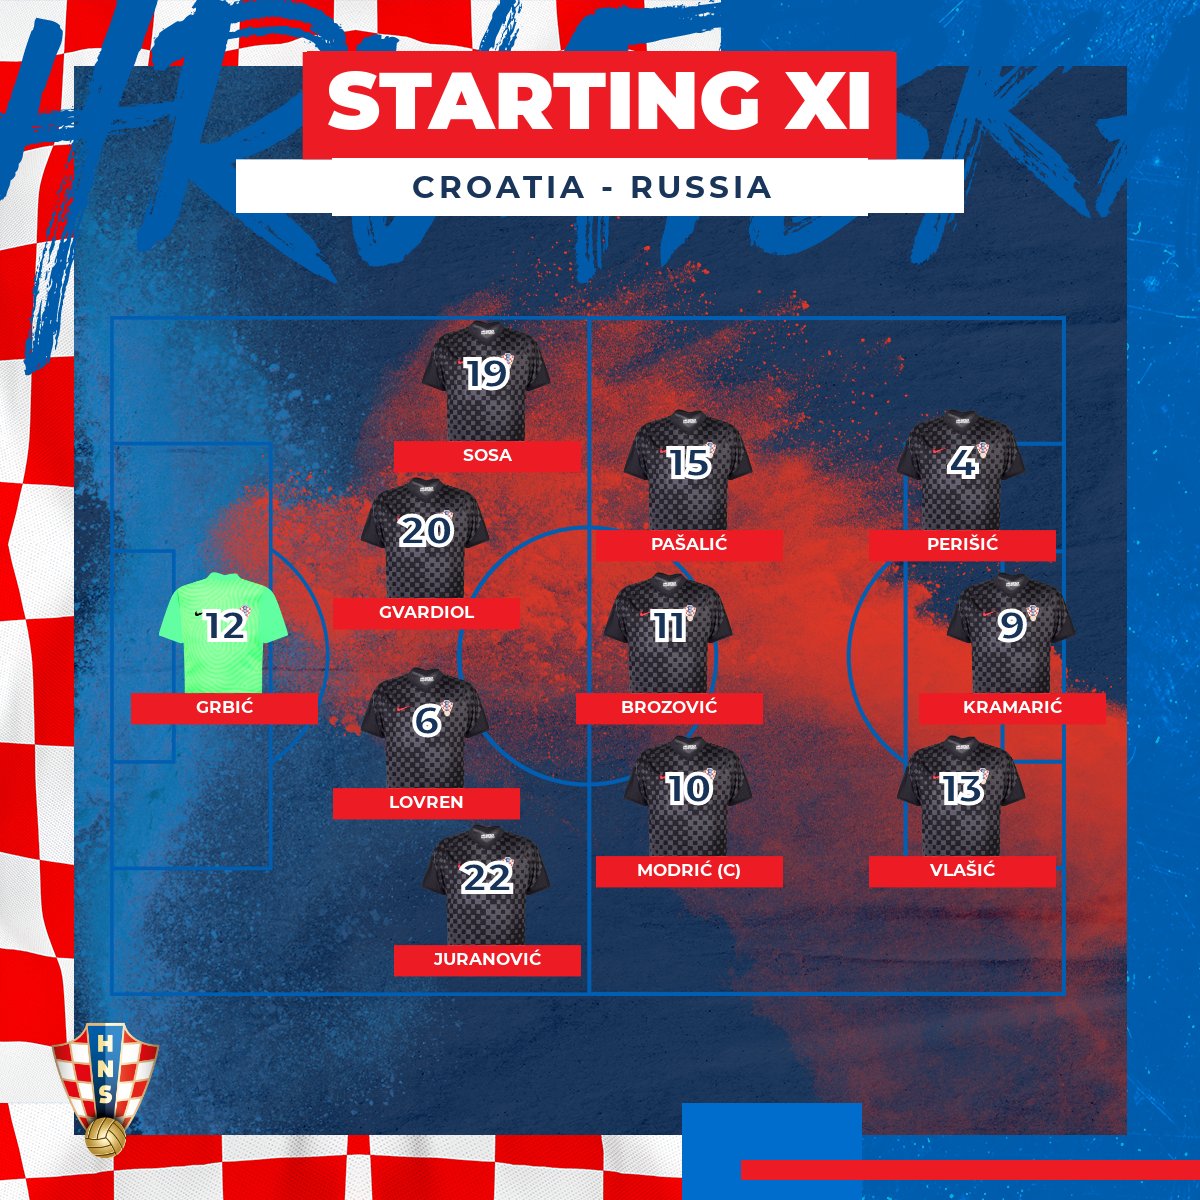 Photo by Croatia National Team